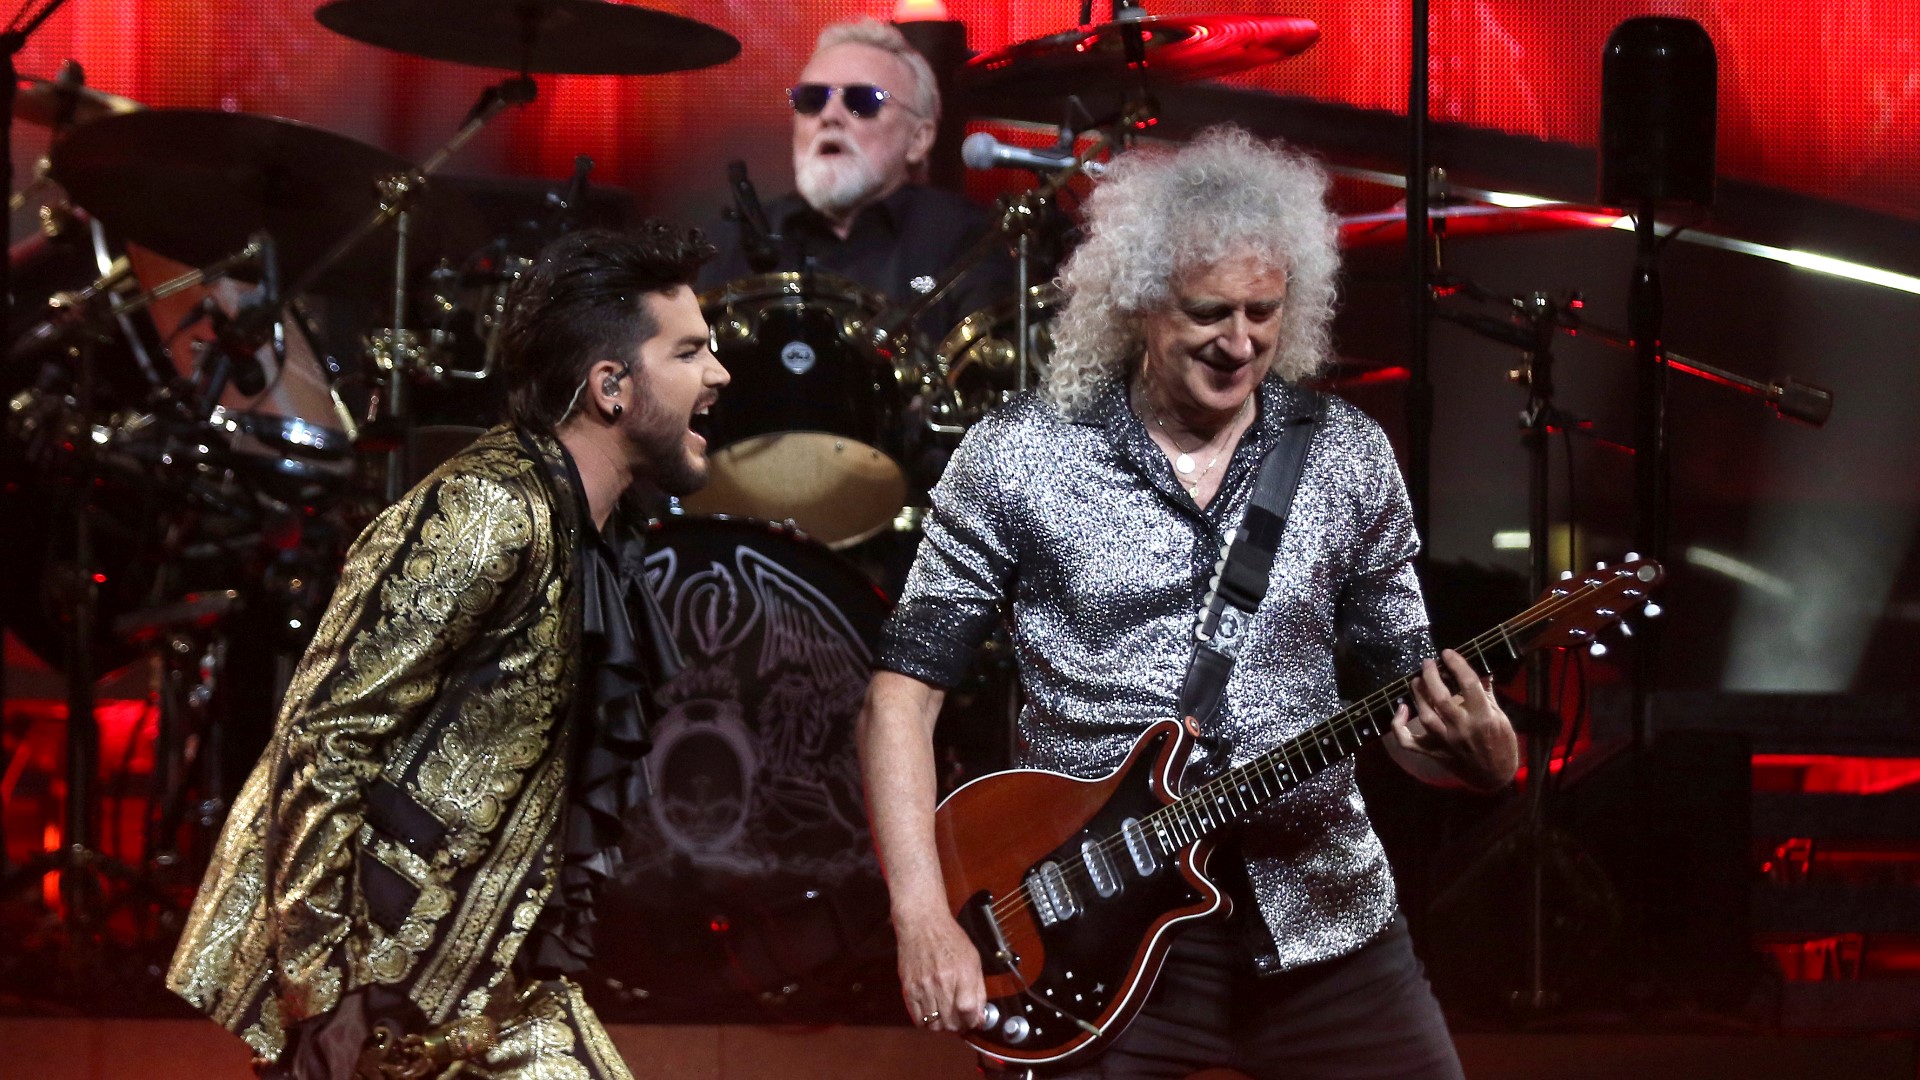 Queen + Adam Lambert: A collaboration between the members of the British band Queen and vocalist Adam Lambert.